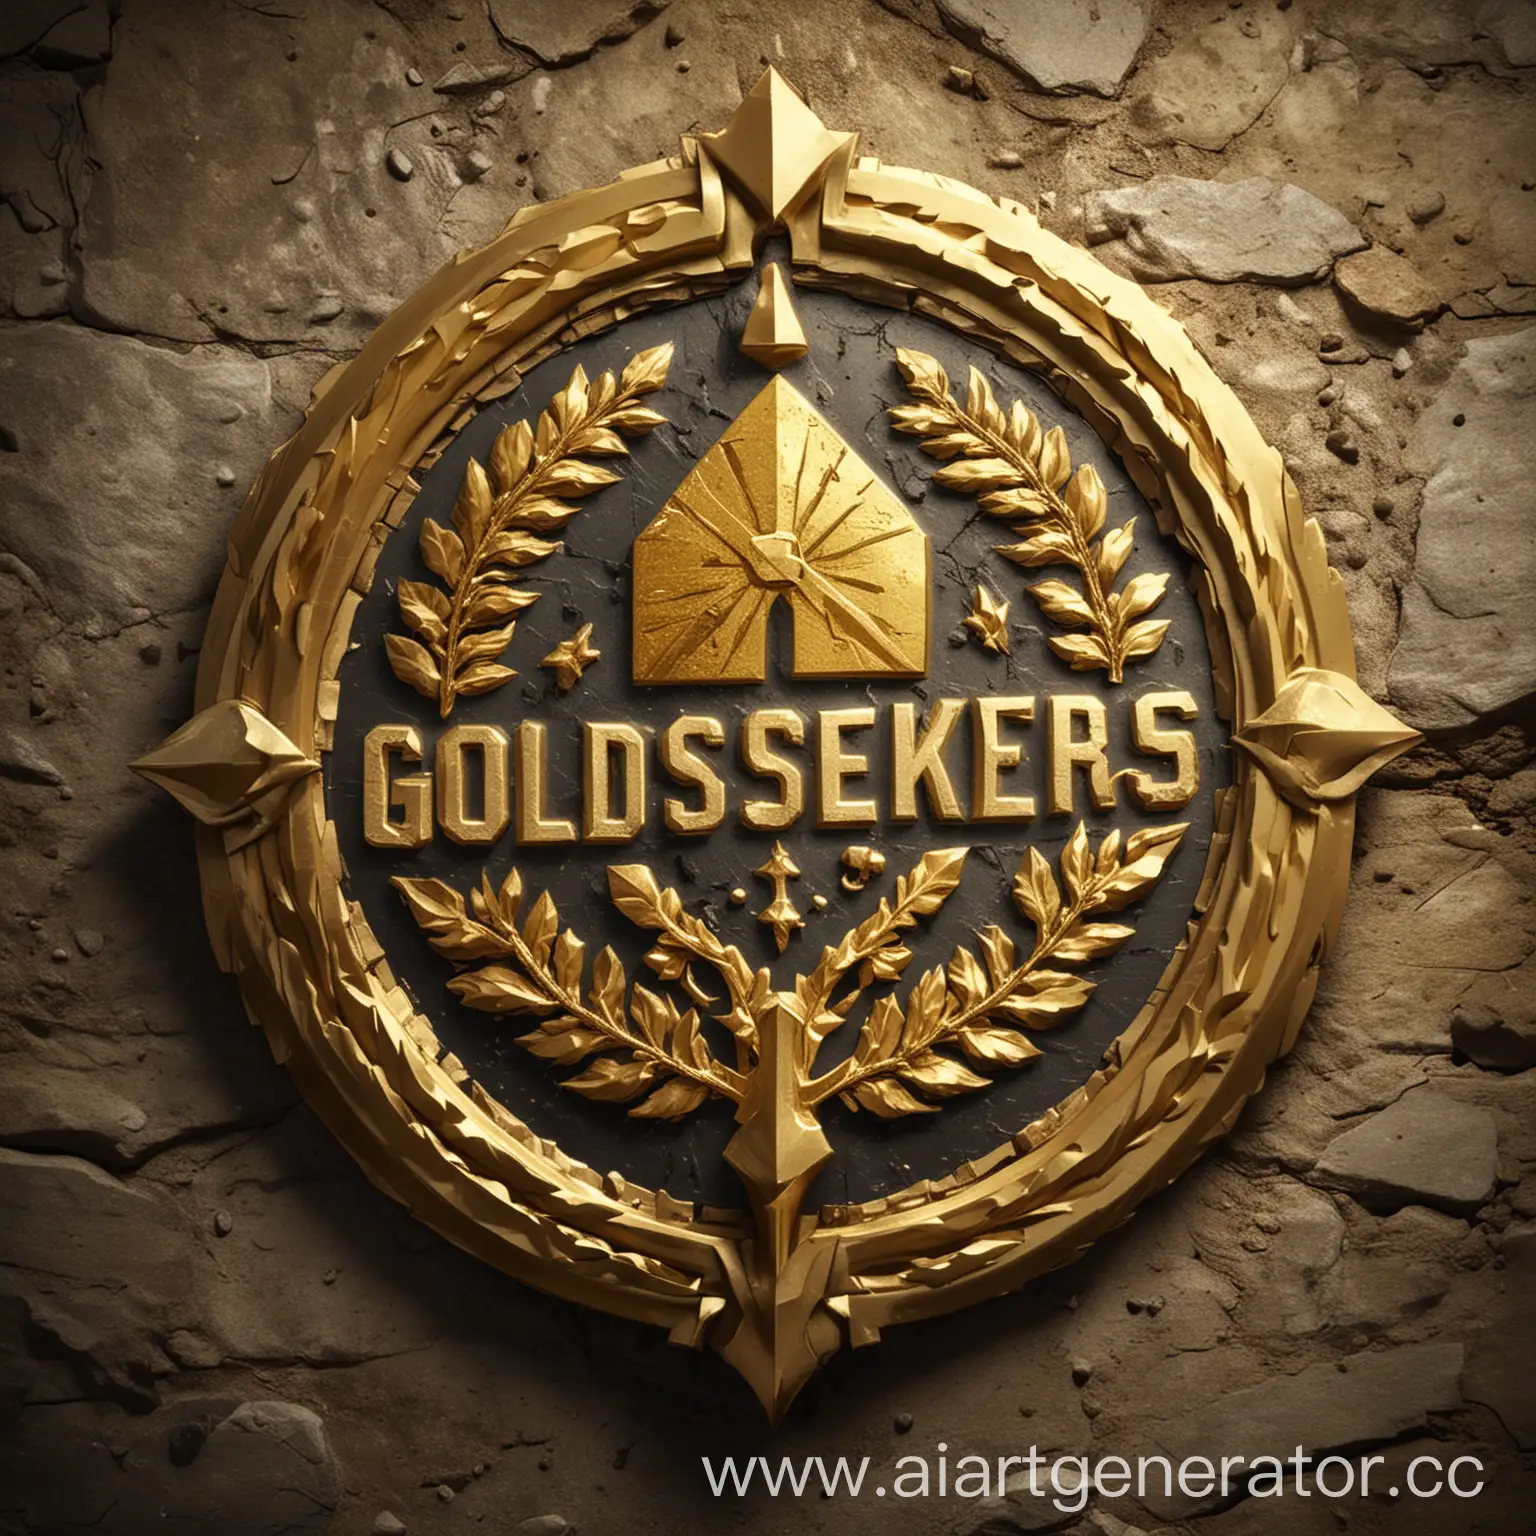 digital gold seekers emblem